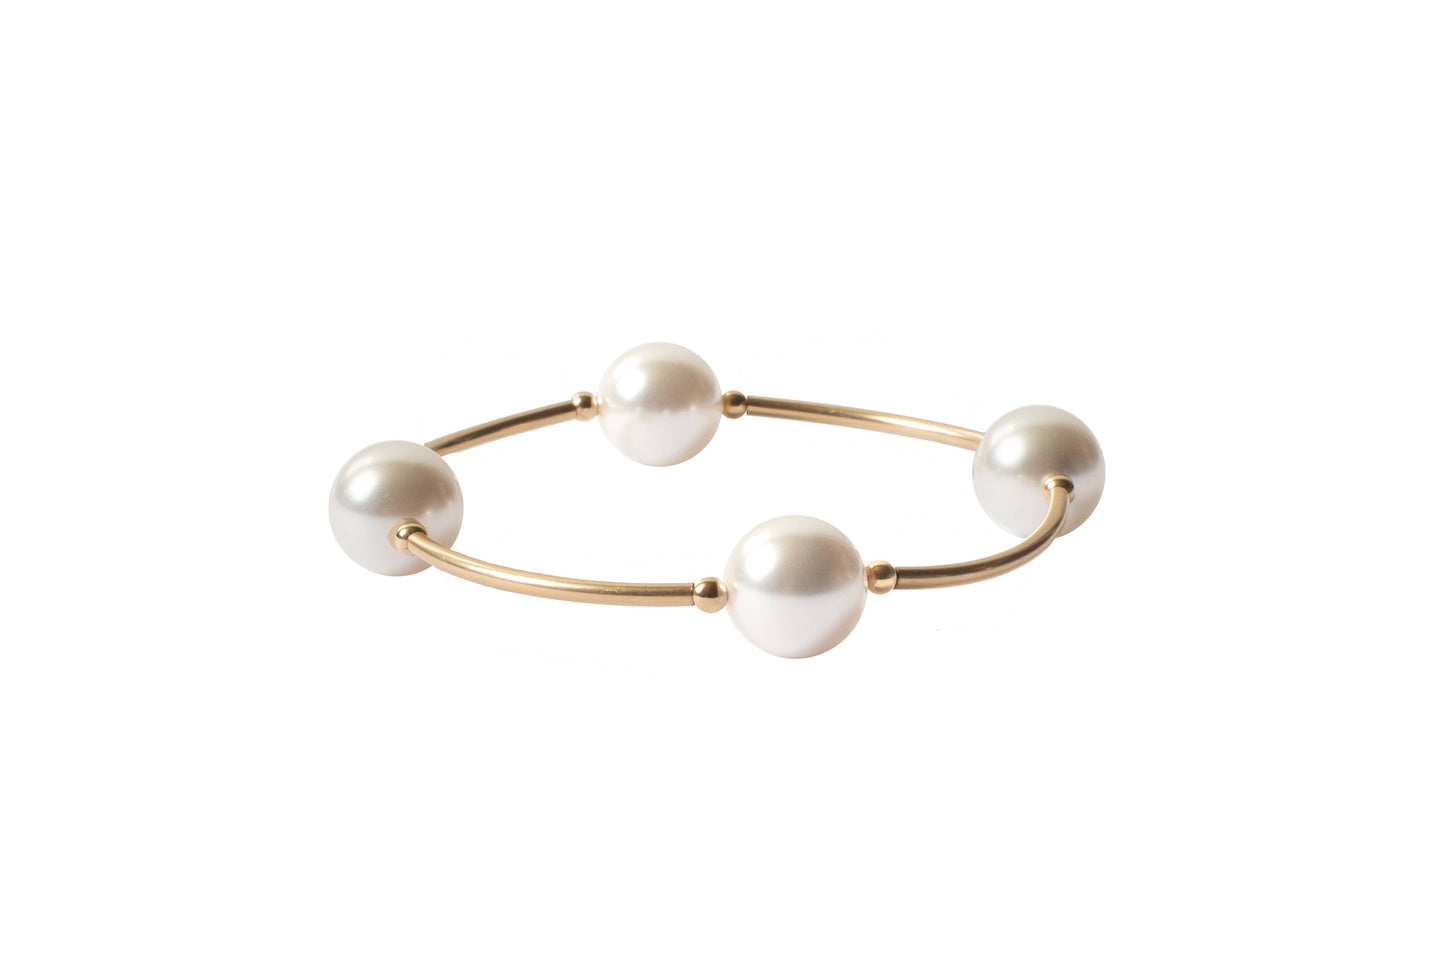 12mm White Blessing Bracelet with Gold Filled Tubes: L